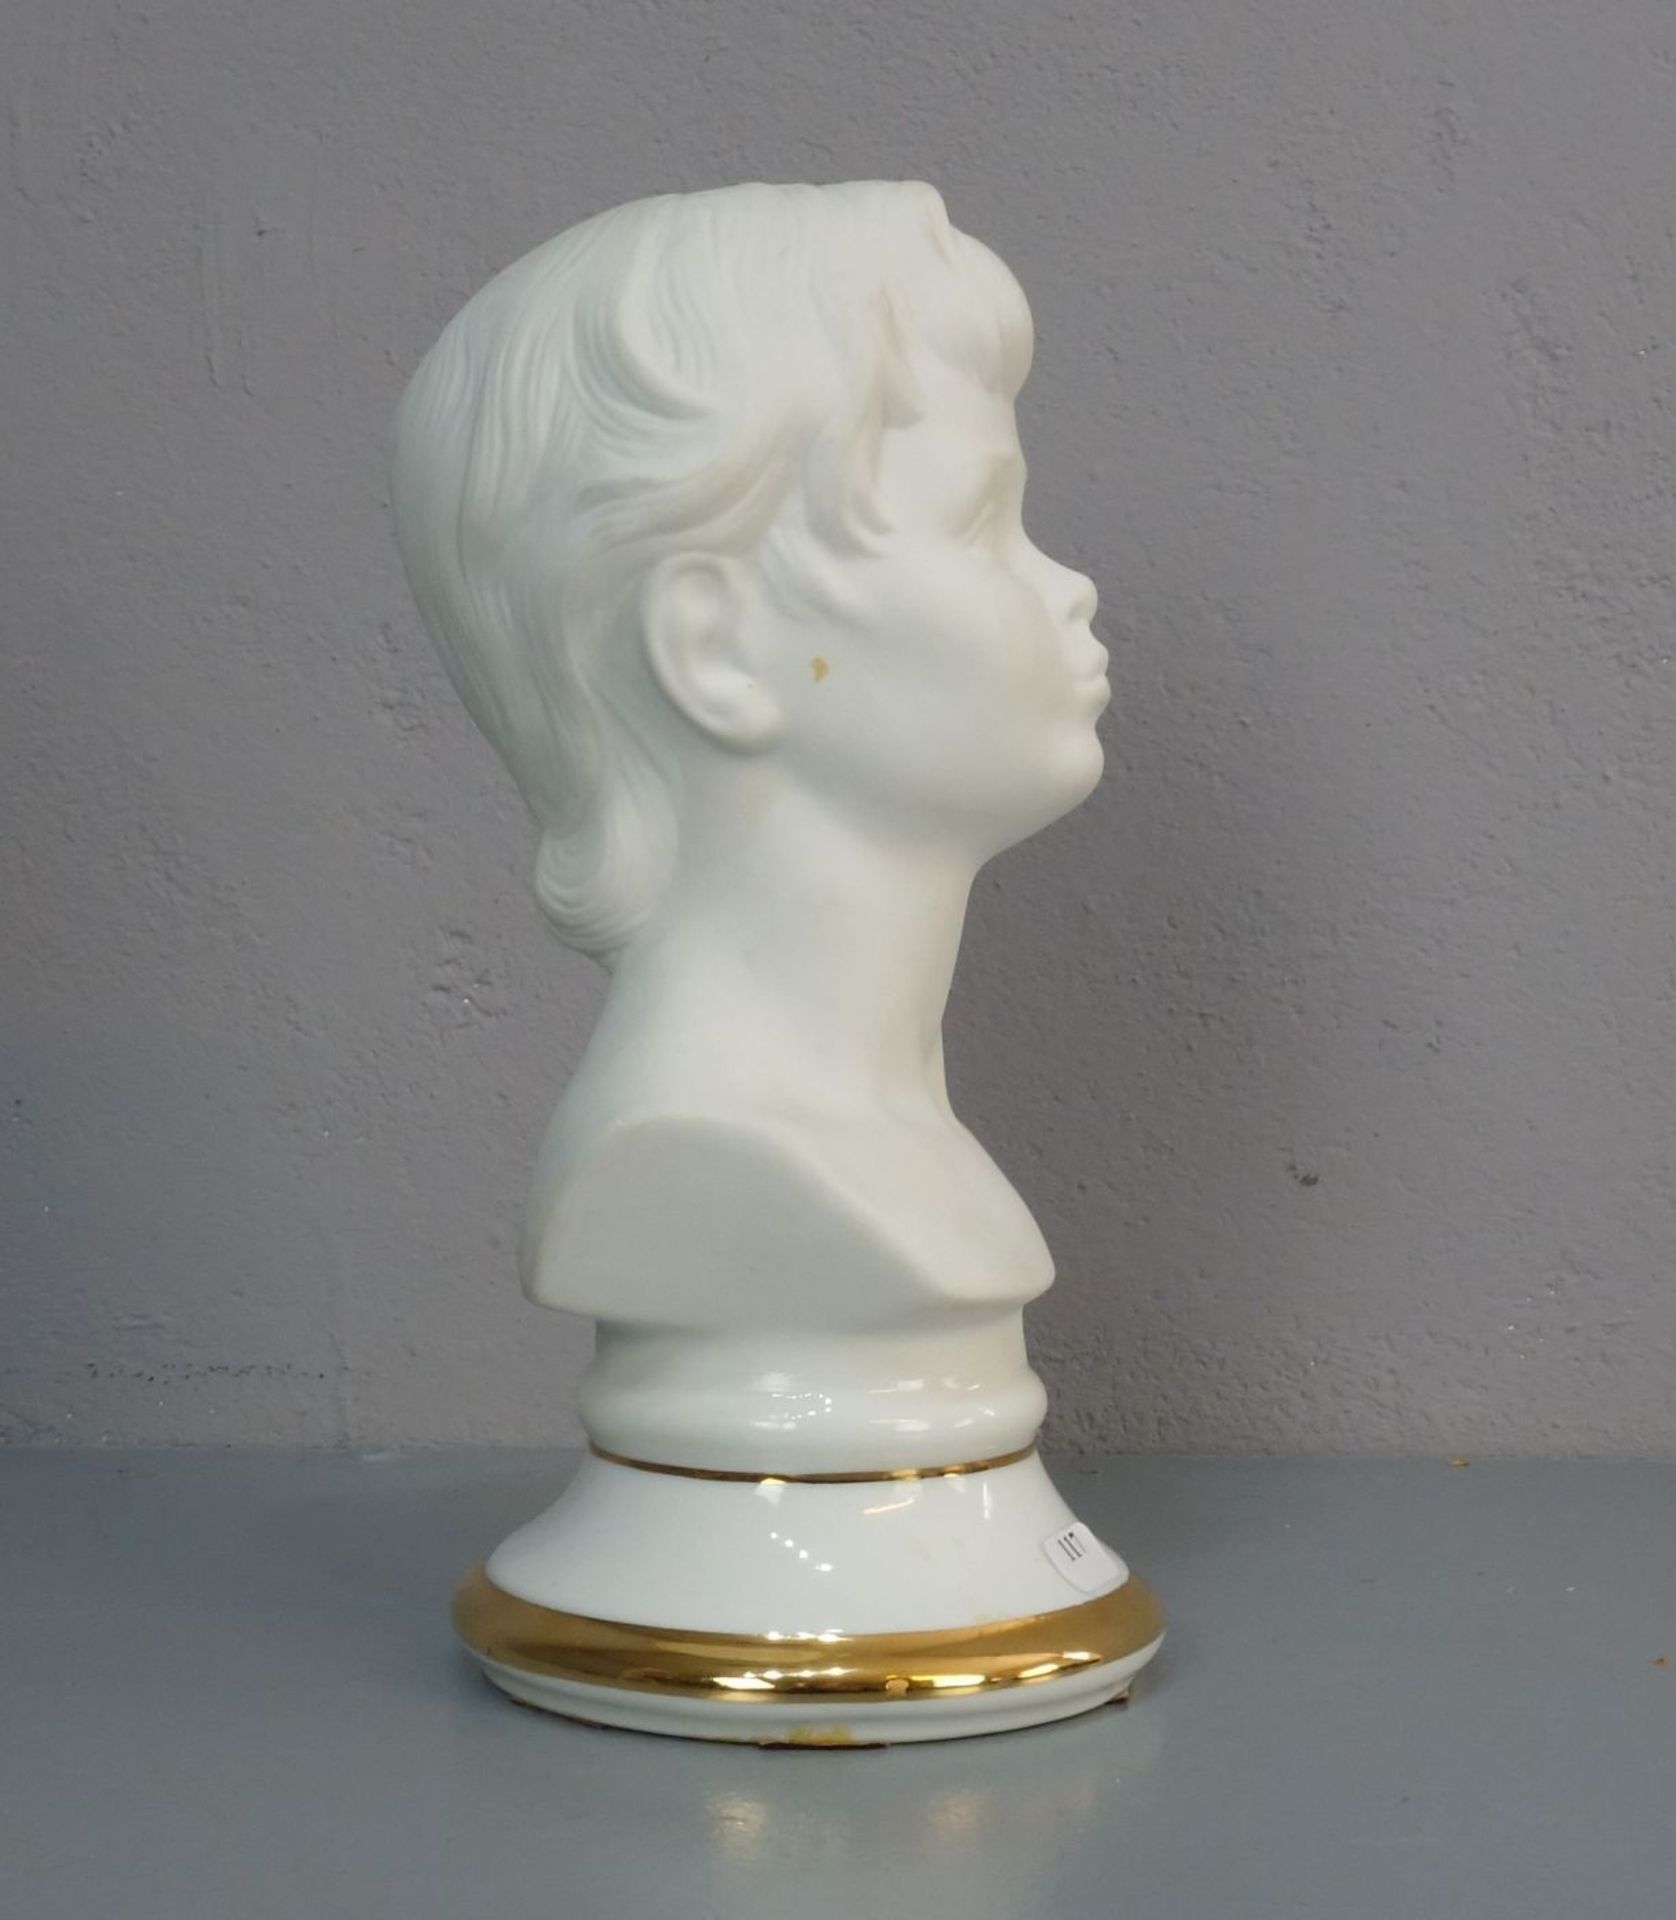 PORZELLANFIGUR / porcelain figure: "Büste eines jungen Mannes", Biskuitporzellan, Manufaktur "SANBO - Image 2 of 5